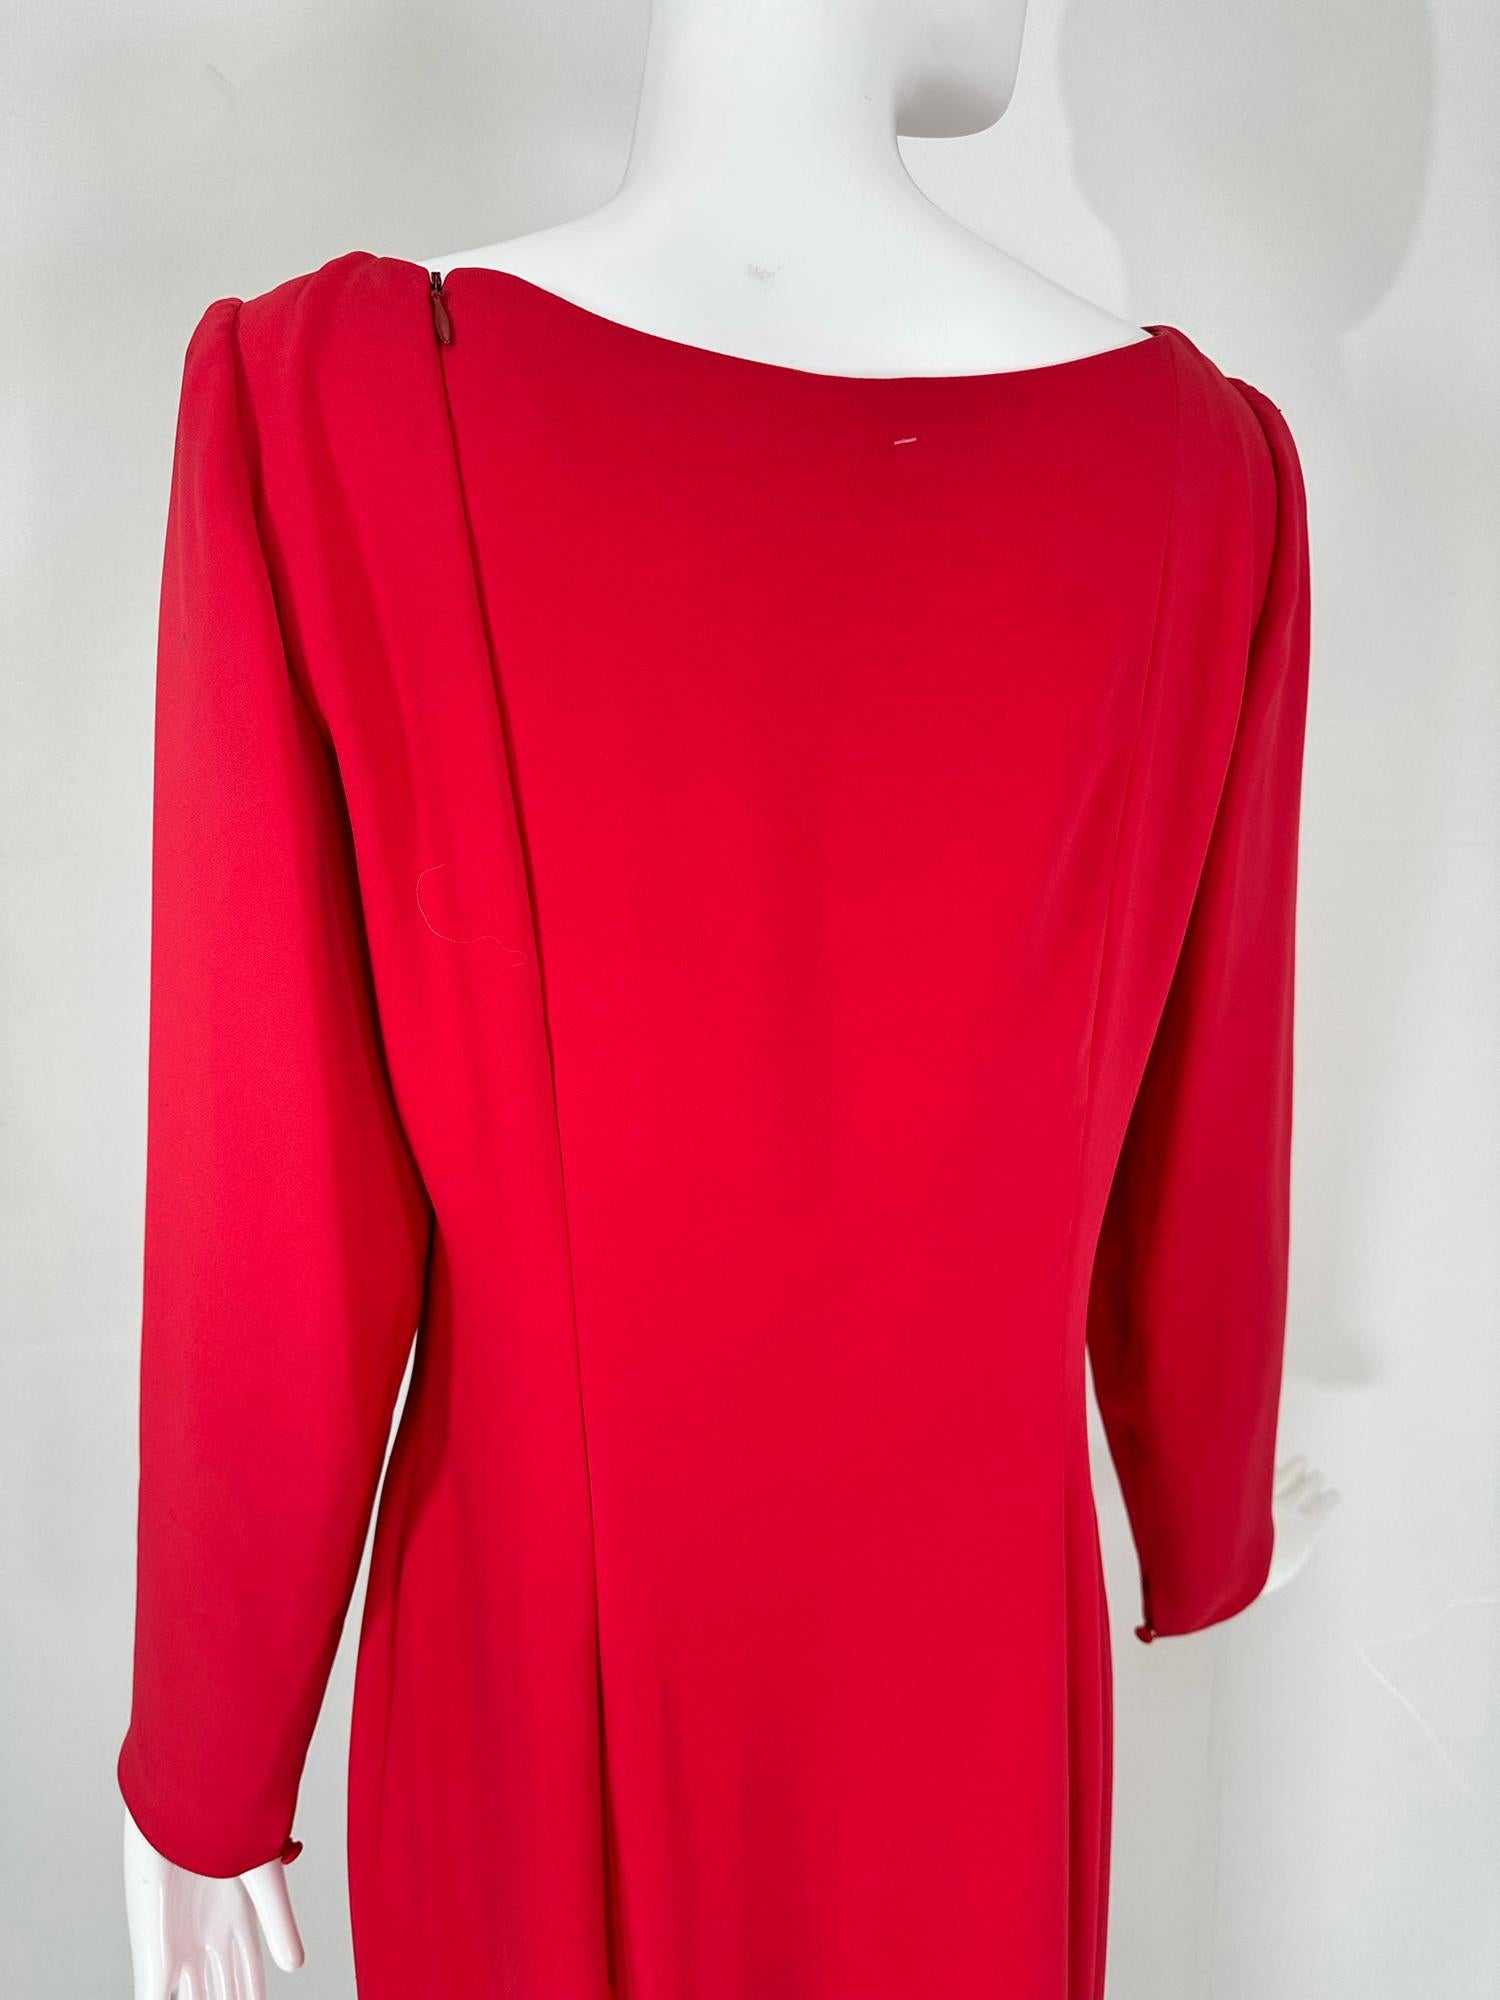 Oscar de la Renta Coral Red Silk Long Sleeve Bateau Neck Column Evening Dress 8 For Sale 9